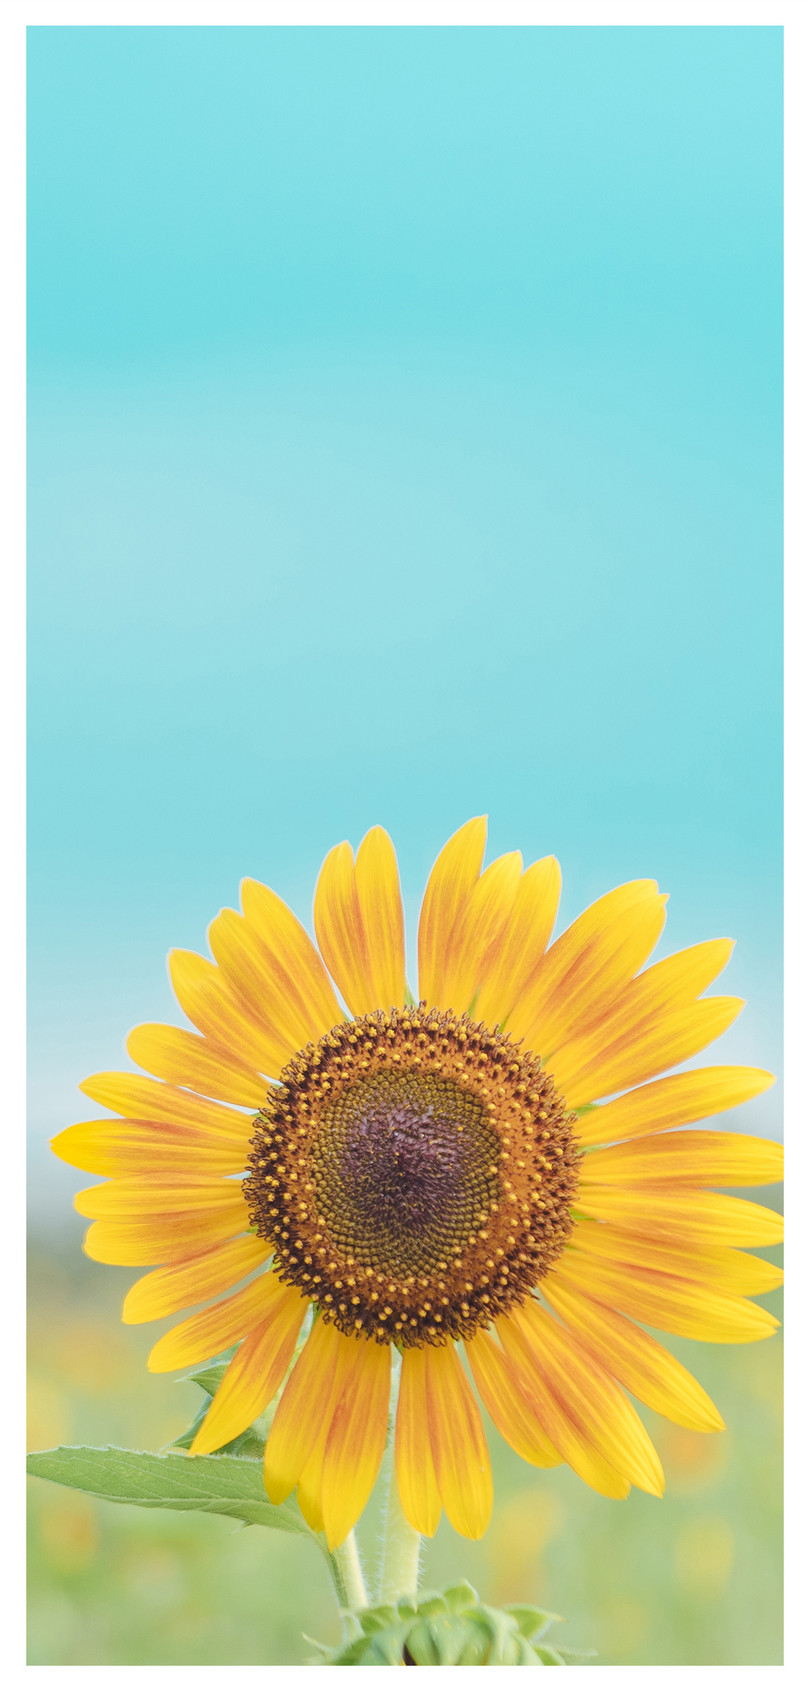 Sunflower Mobile Phone Wallpaper Backgrounds Images Free Download 400386085 Lovepik Com